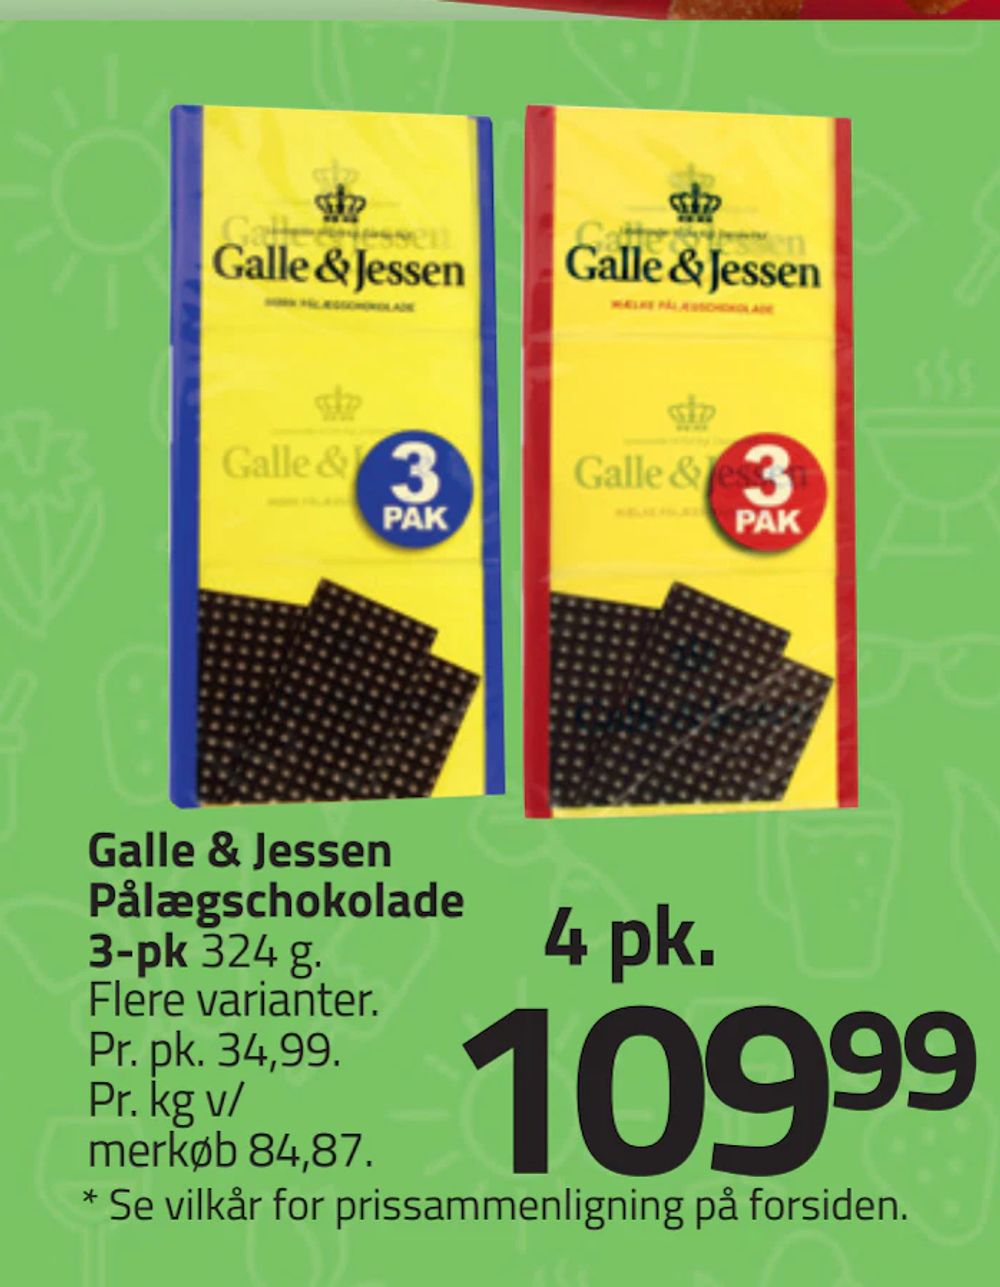 Tilbud på Galle & Jessen Pålægschokolade 3-pk fra Fleggaard til 109,99 kr.